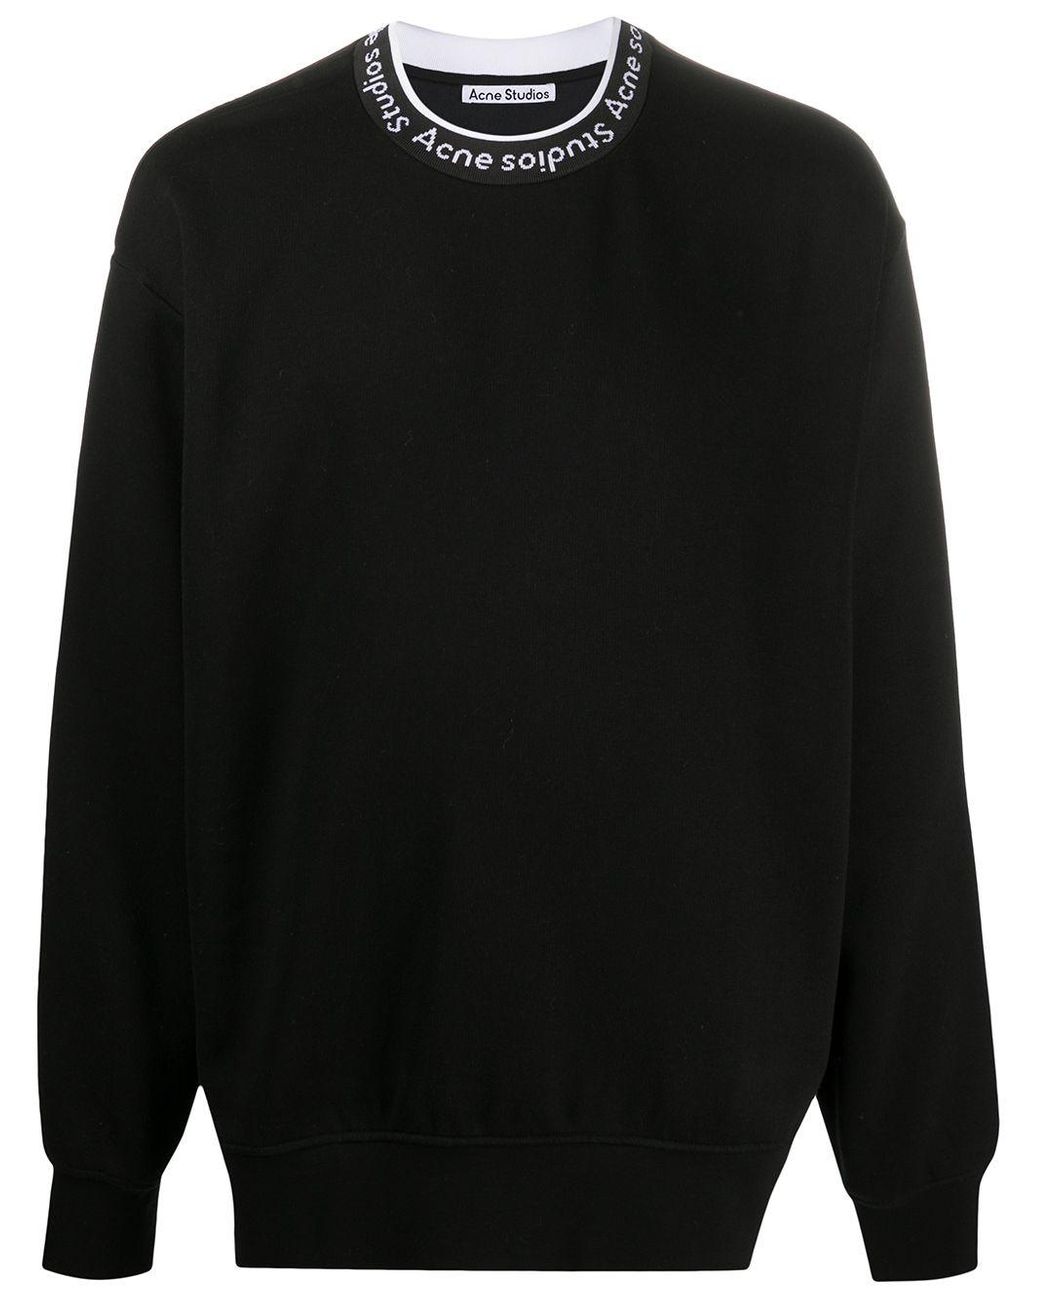 Acne Studios Cotton Logo Neck Sweatshirt in Black for Men - Save 26% - Lyst